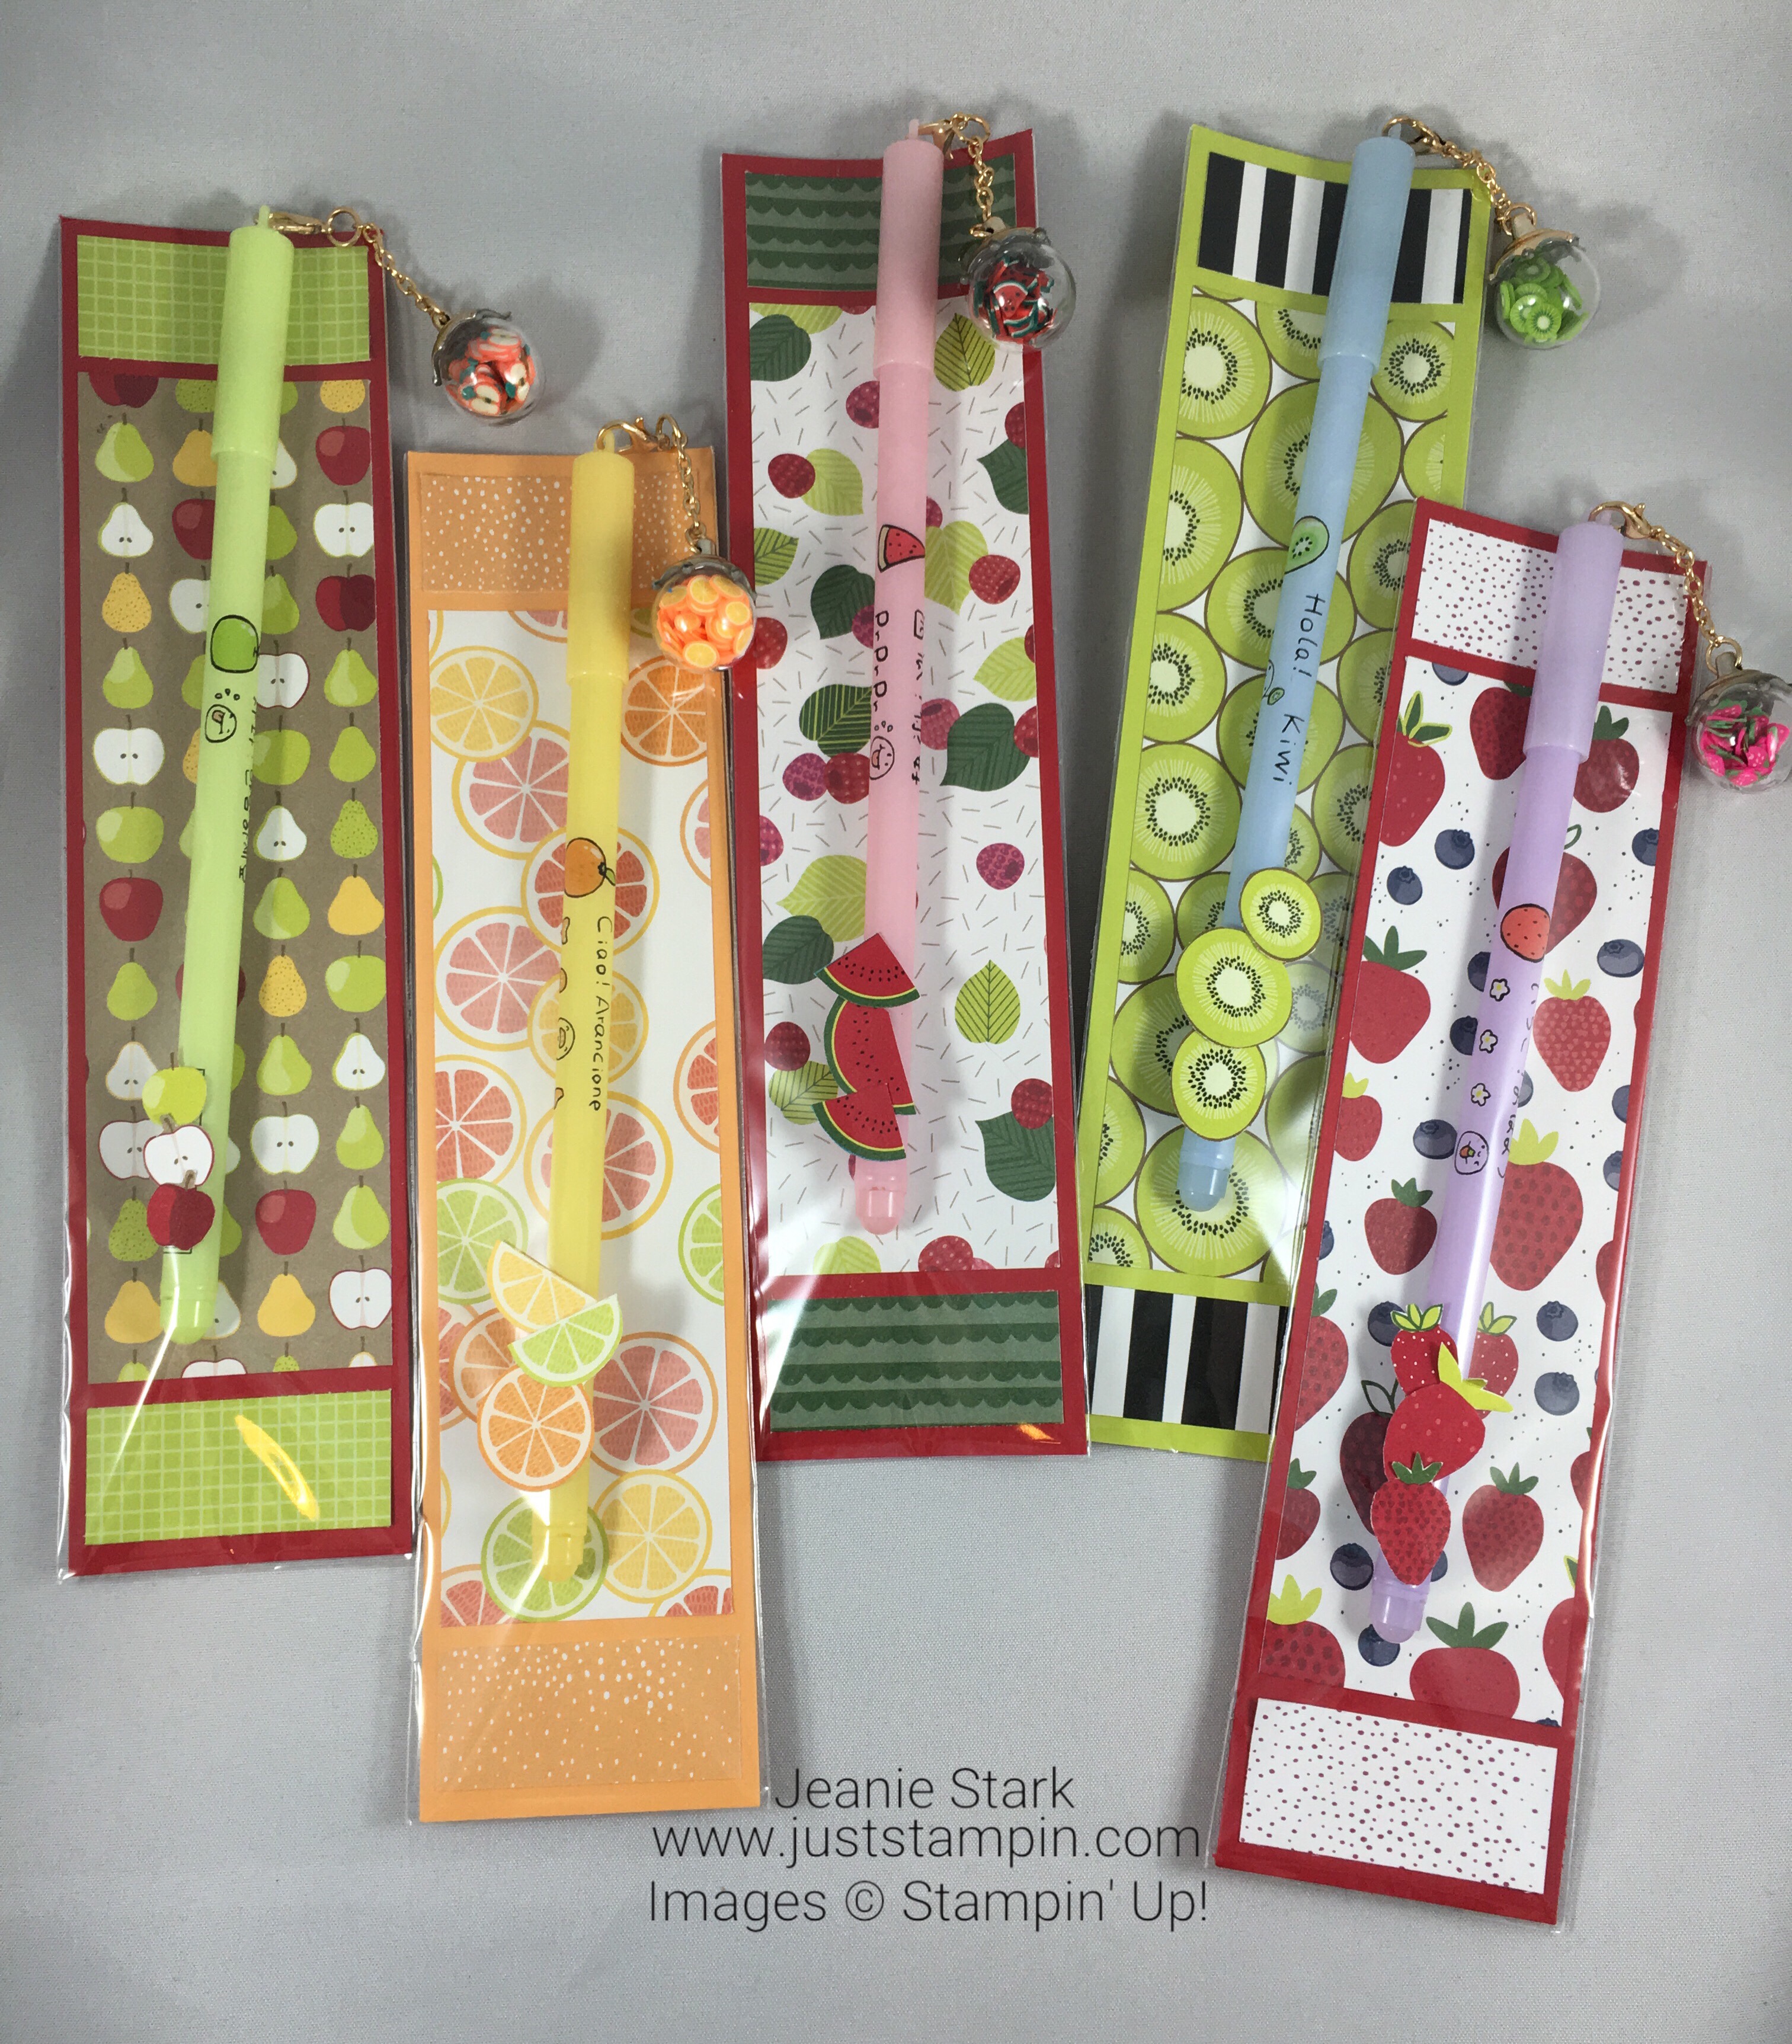 Stampin Up Tutti-Frutti Designer Series Paper gift idea - Jeanie Stark StampinUp